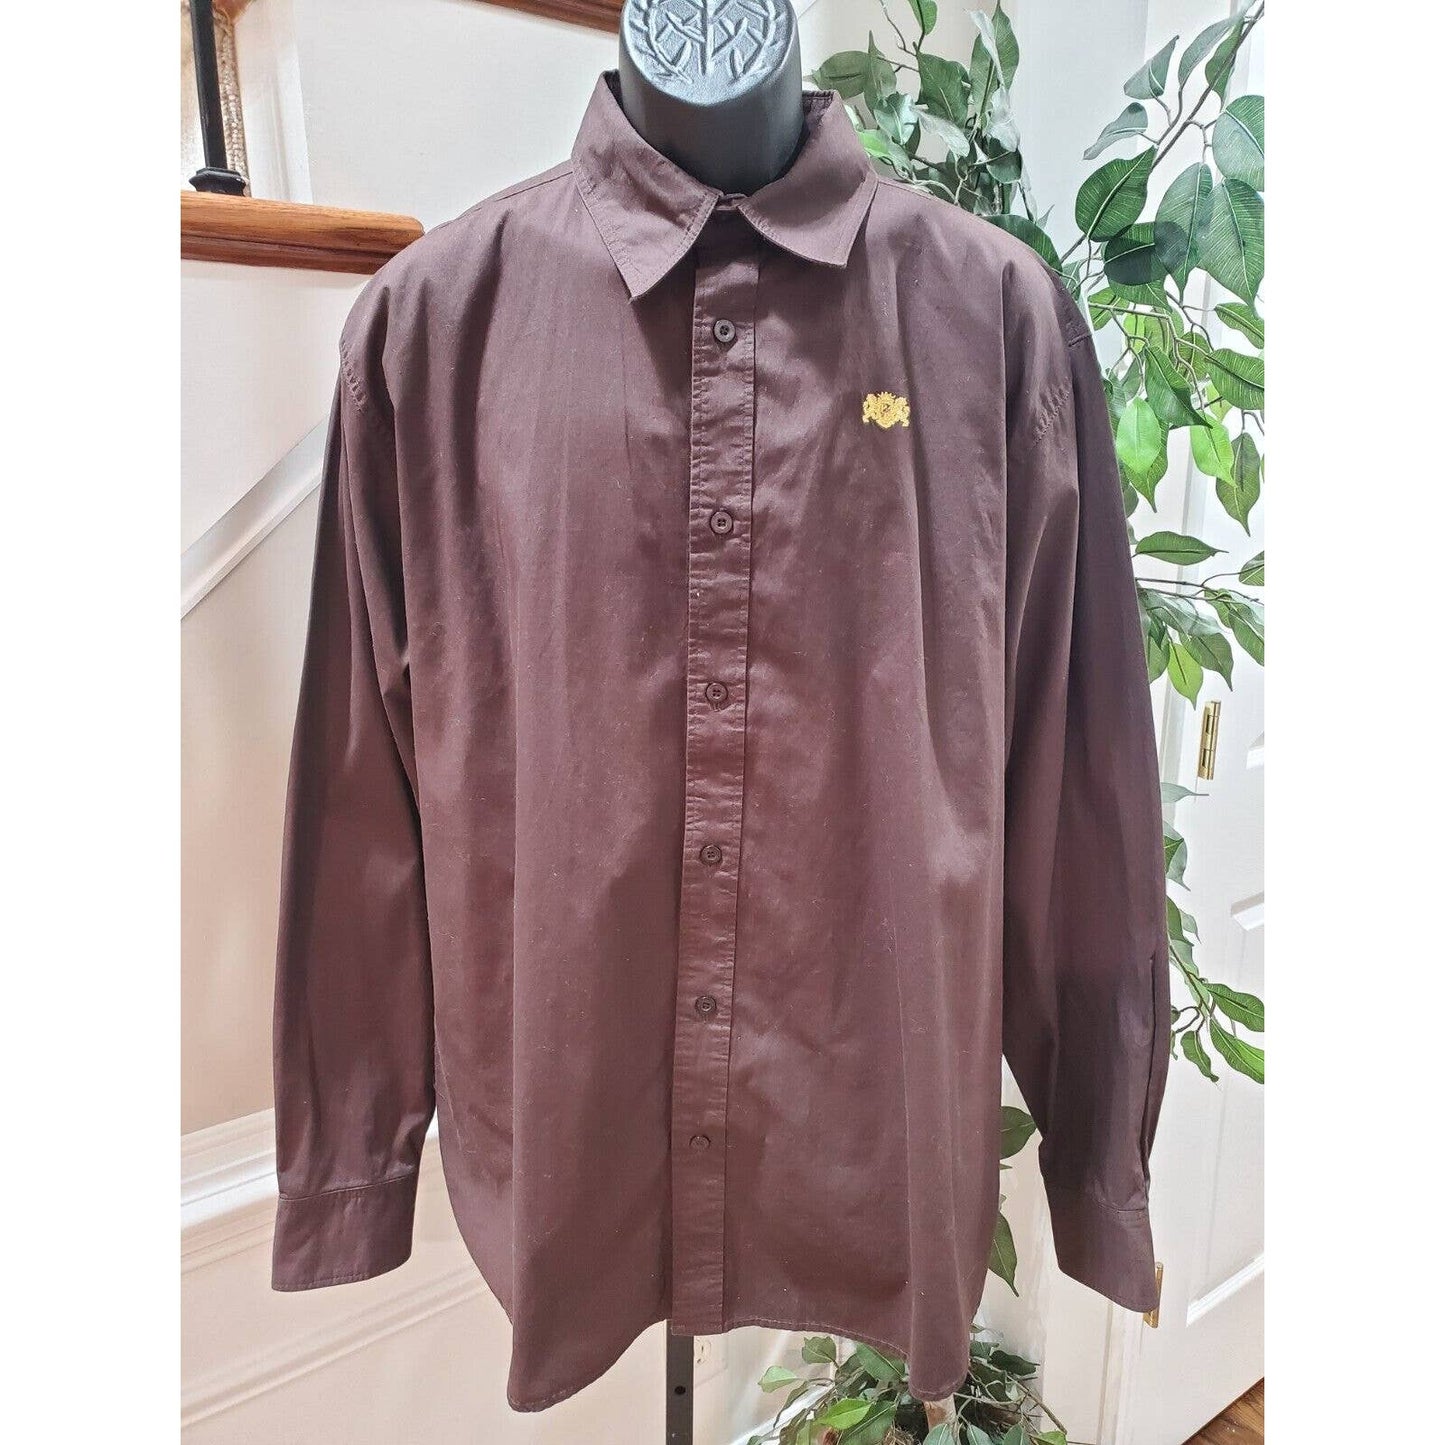 Pelle Pelle Men's Brown 100% Cotton Collared Long Sleeve Buttons Down Shirt 2XL